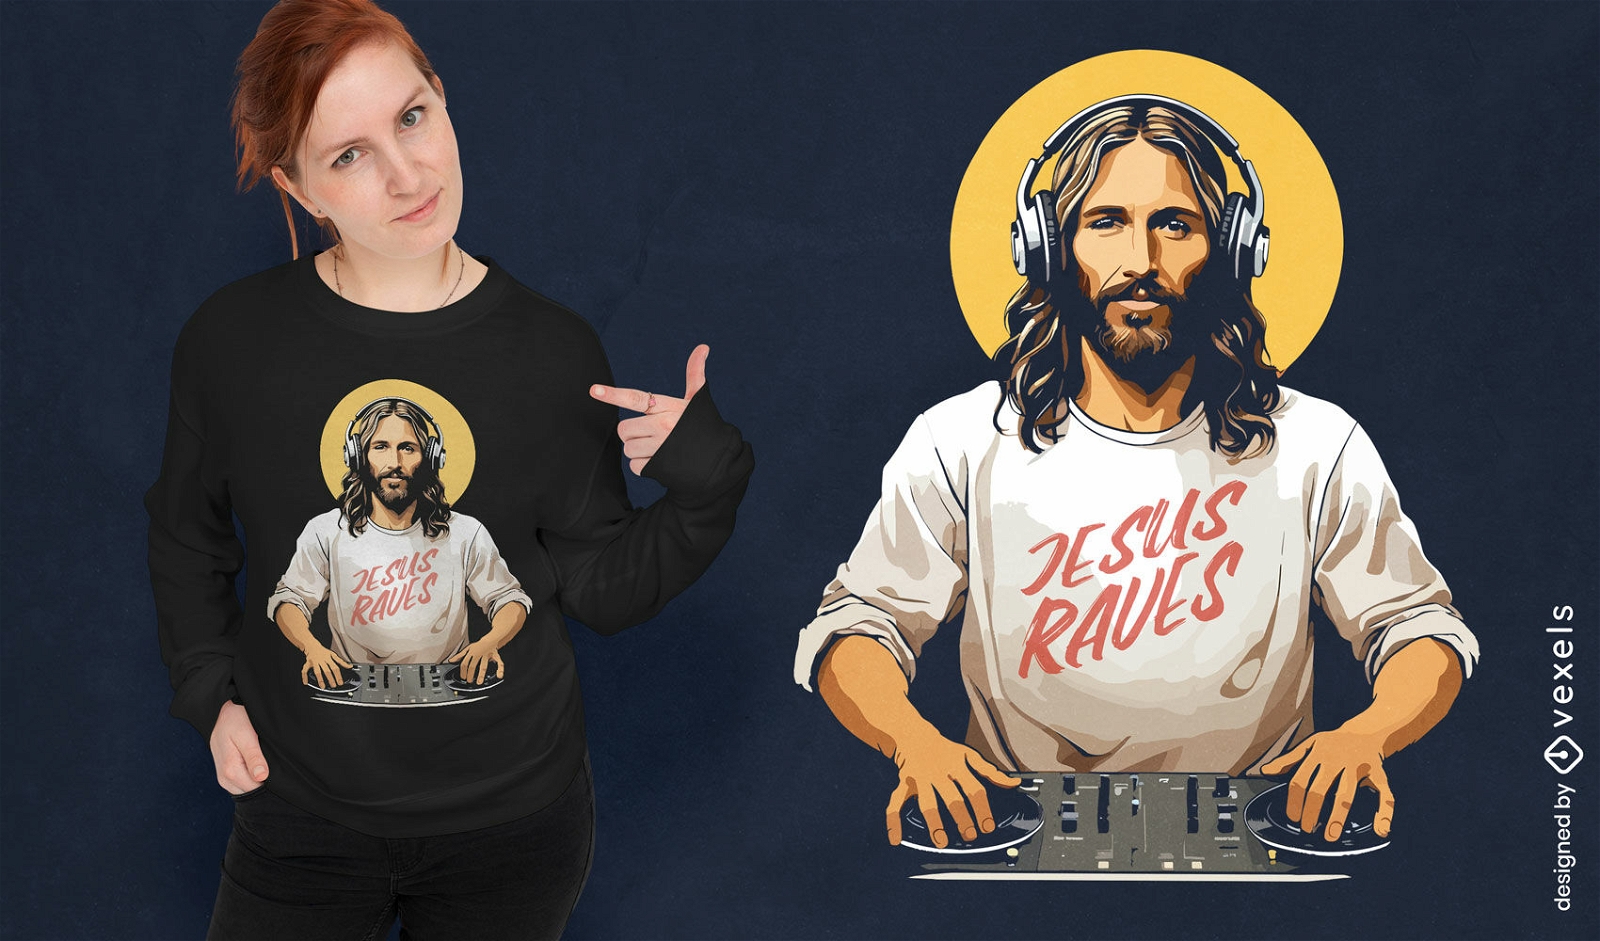 DJ Jesus schwärmt vom T-Shirt-Design